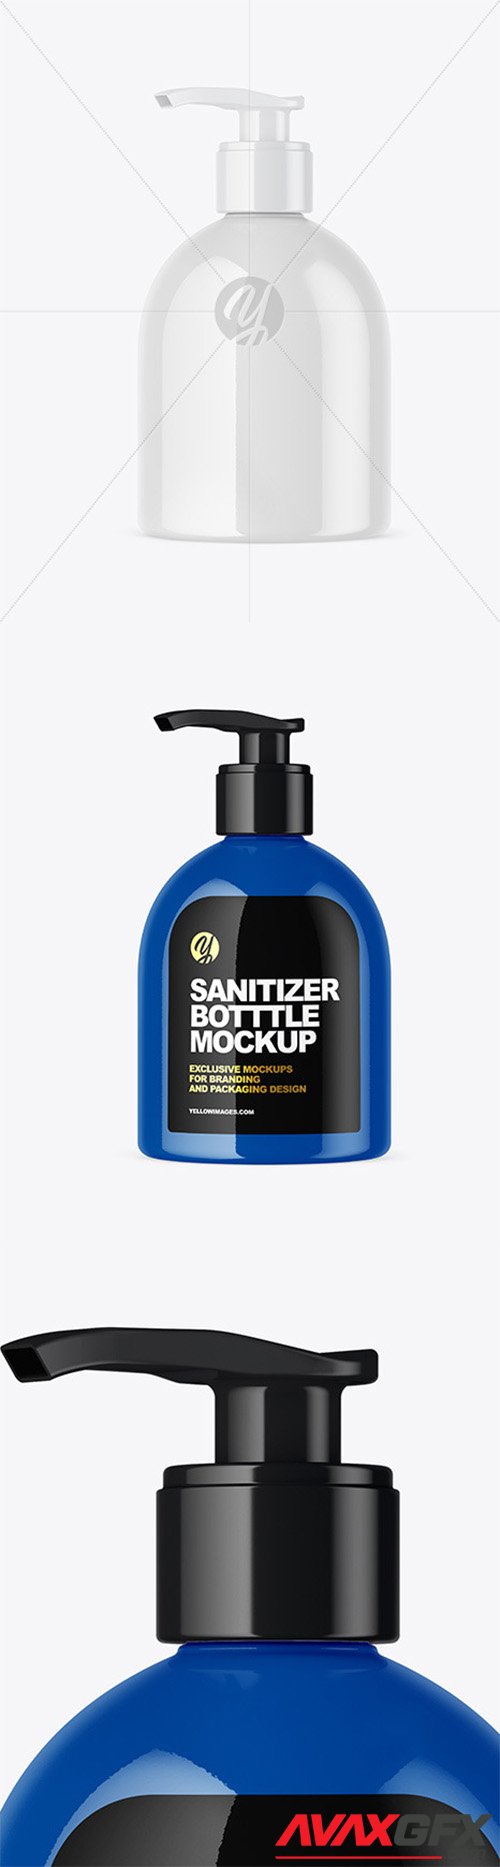 Glossy Sanitizer Bottle Mockup 60269